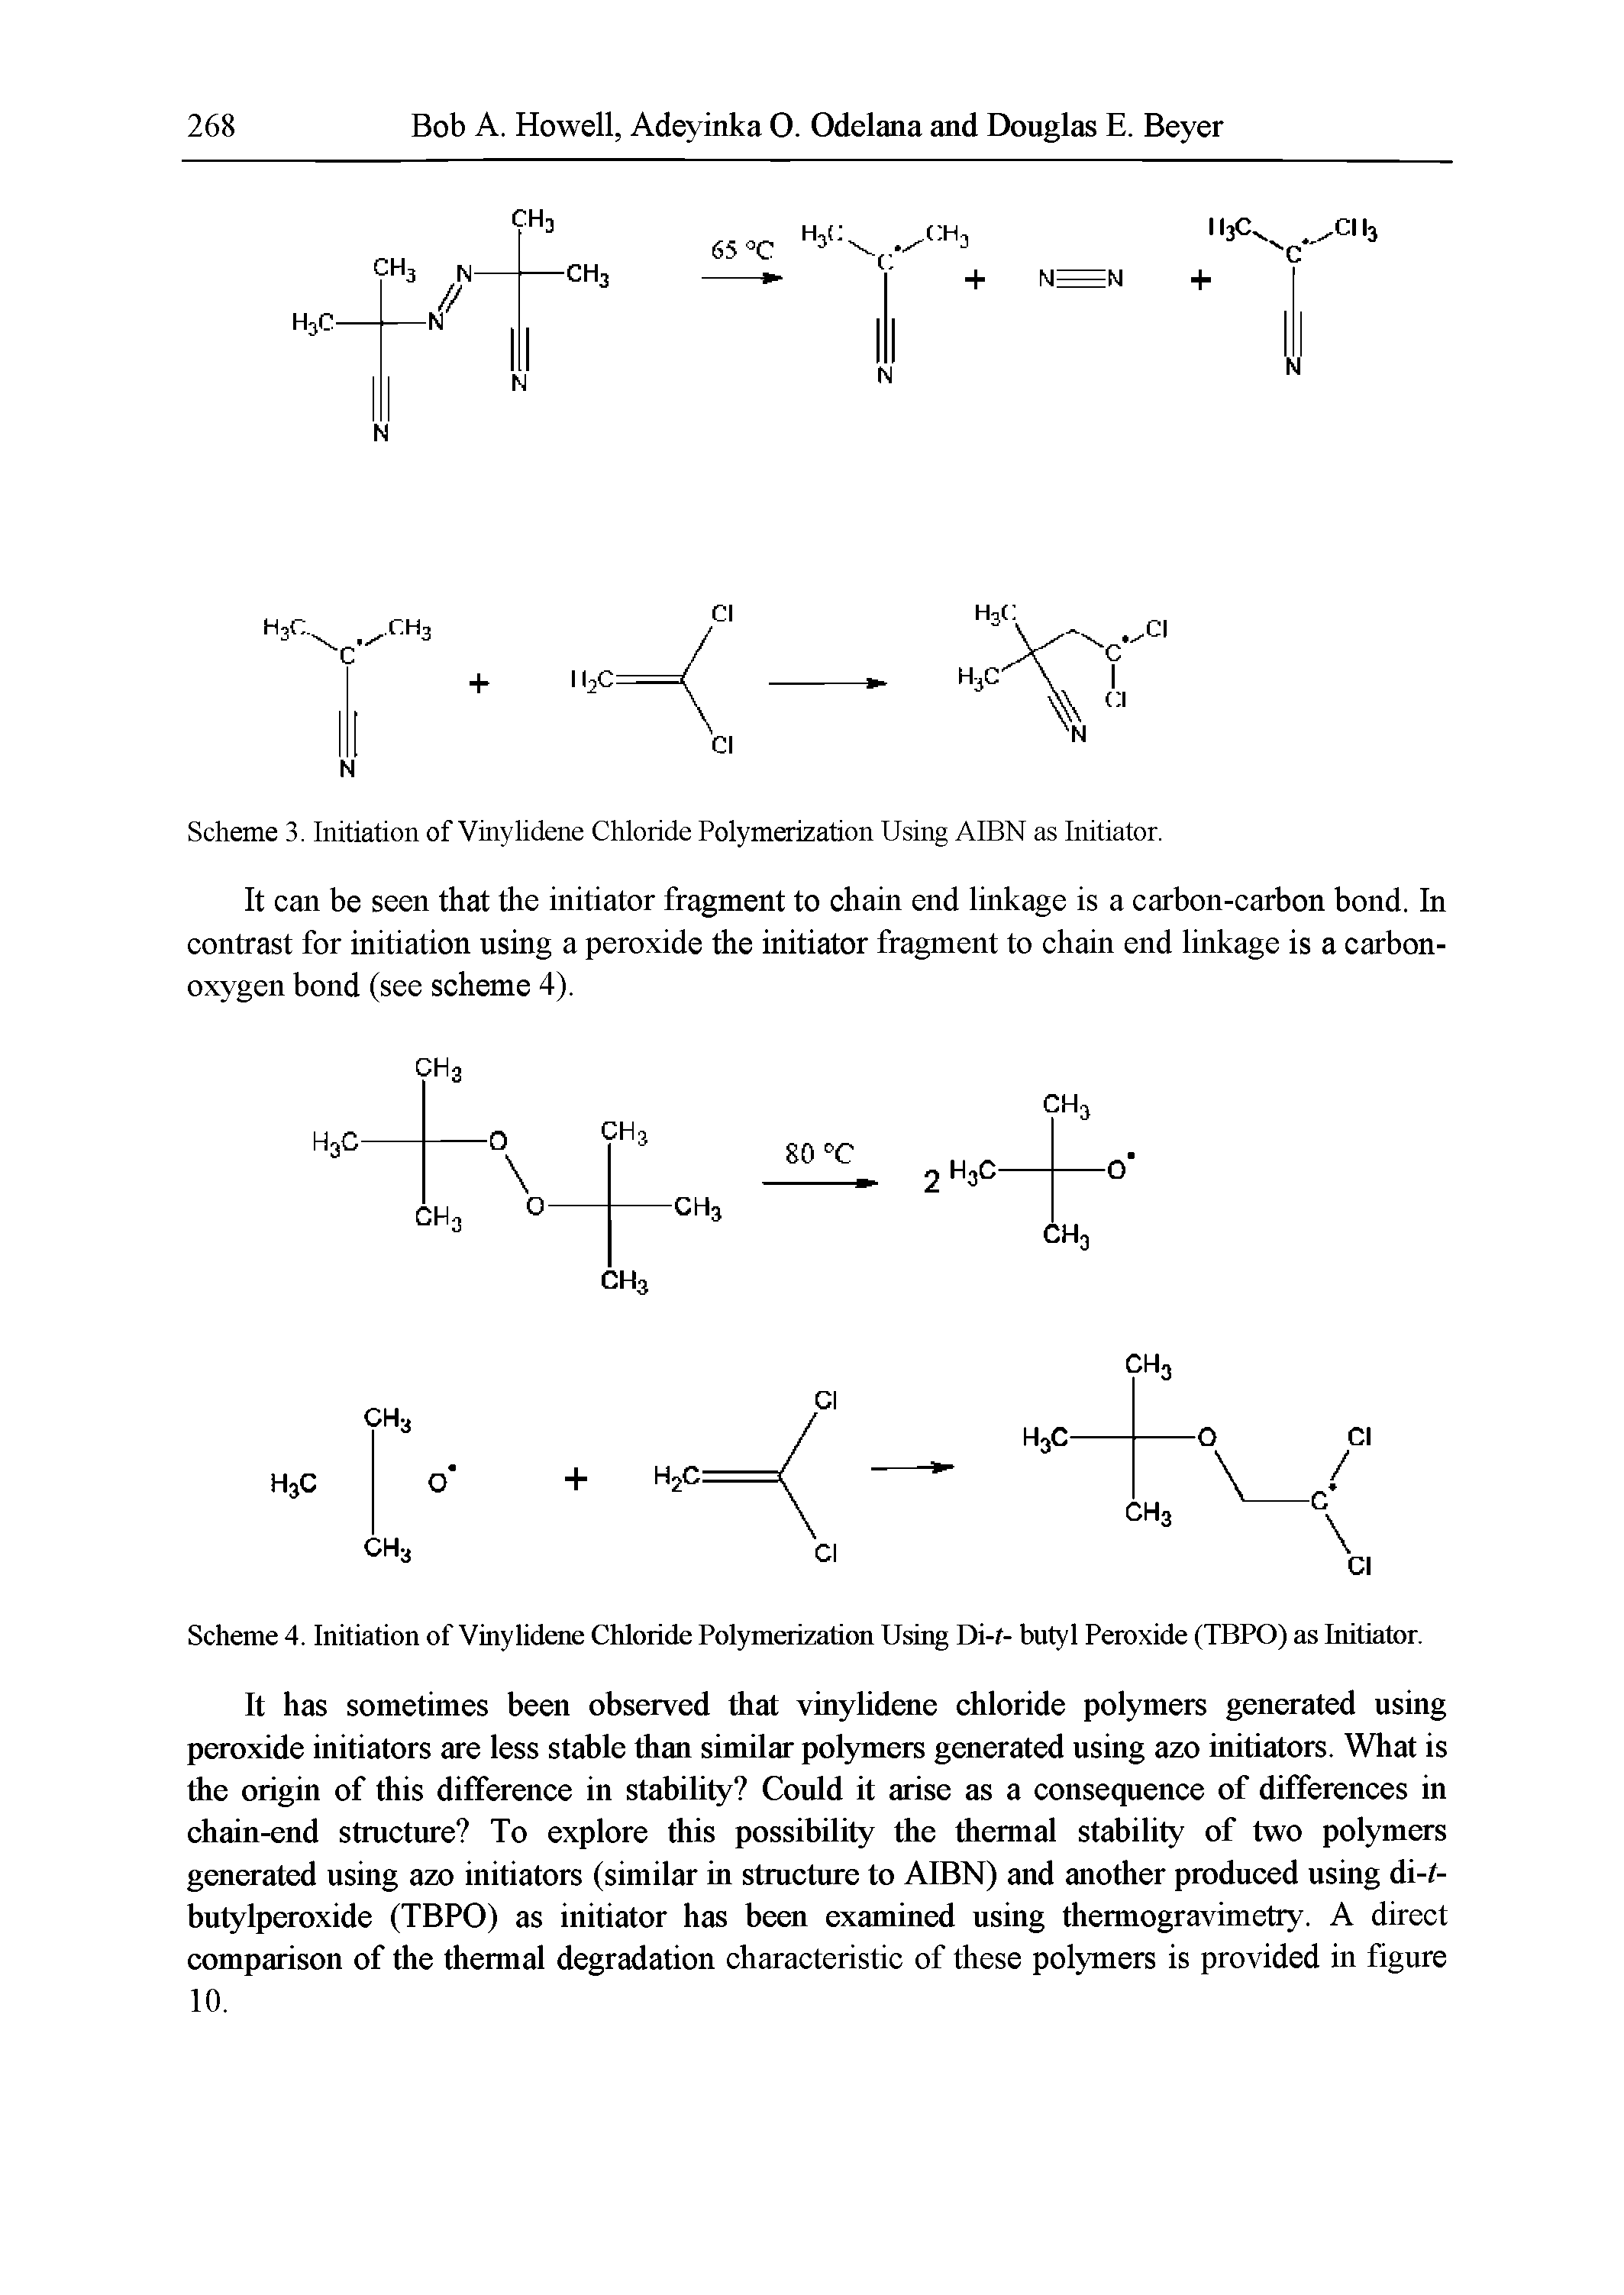 Scheme 4. Initiation of Vinylidene Chloride Polymerization Using Di-f- butyl Peroxide (TBPO) as Initiator.